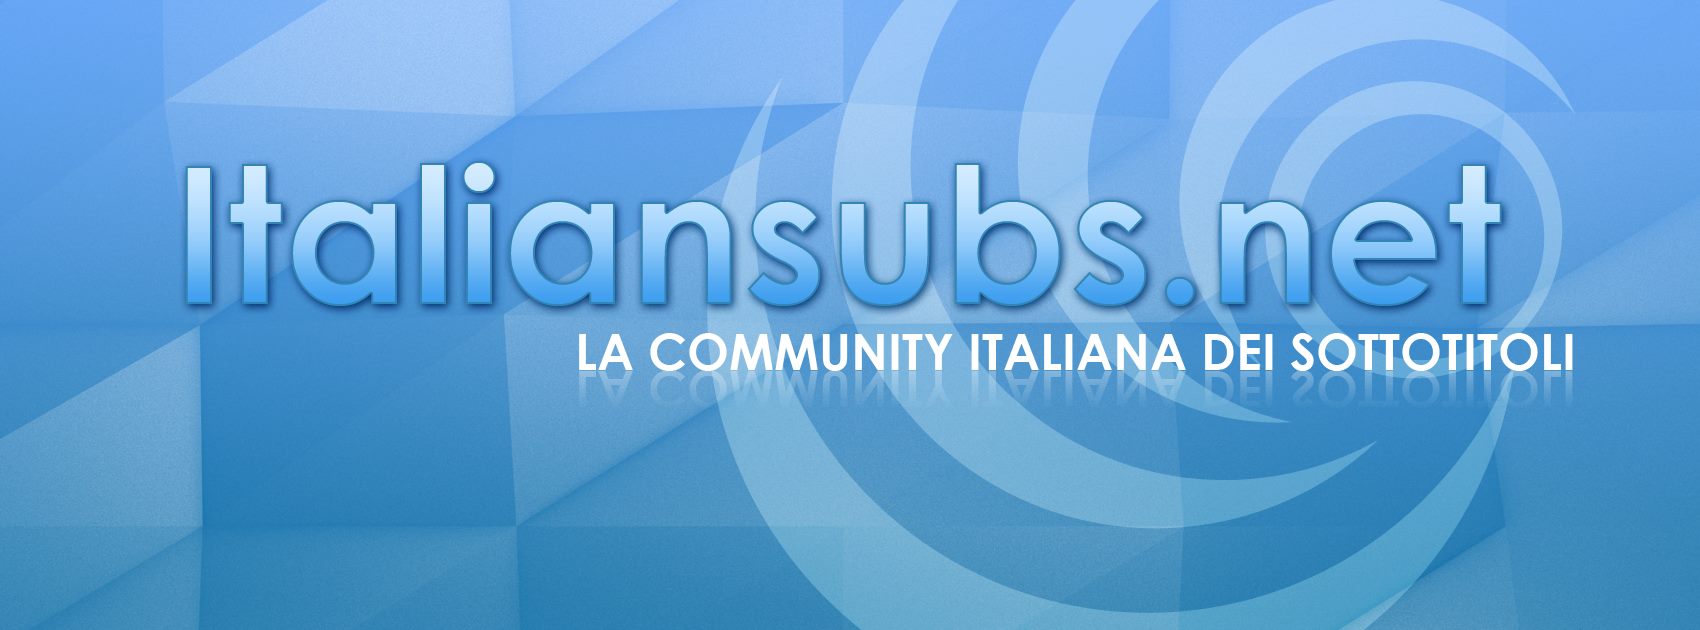 Chiude ItalianSubs, storica community italiana dedicata ai sottotitoli